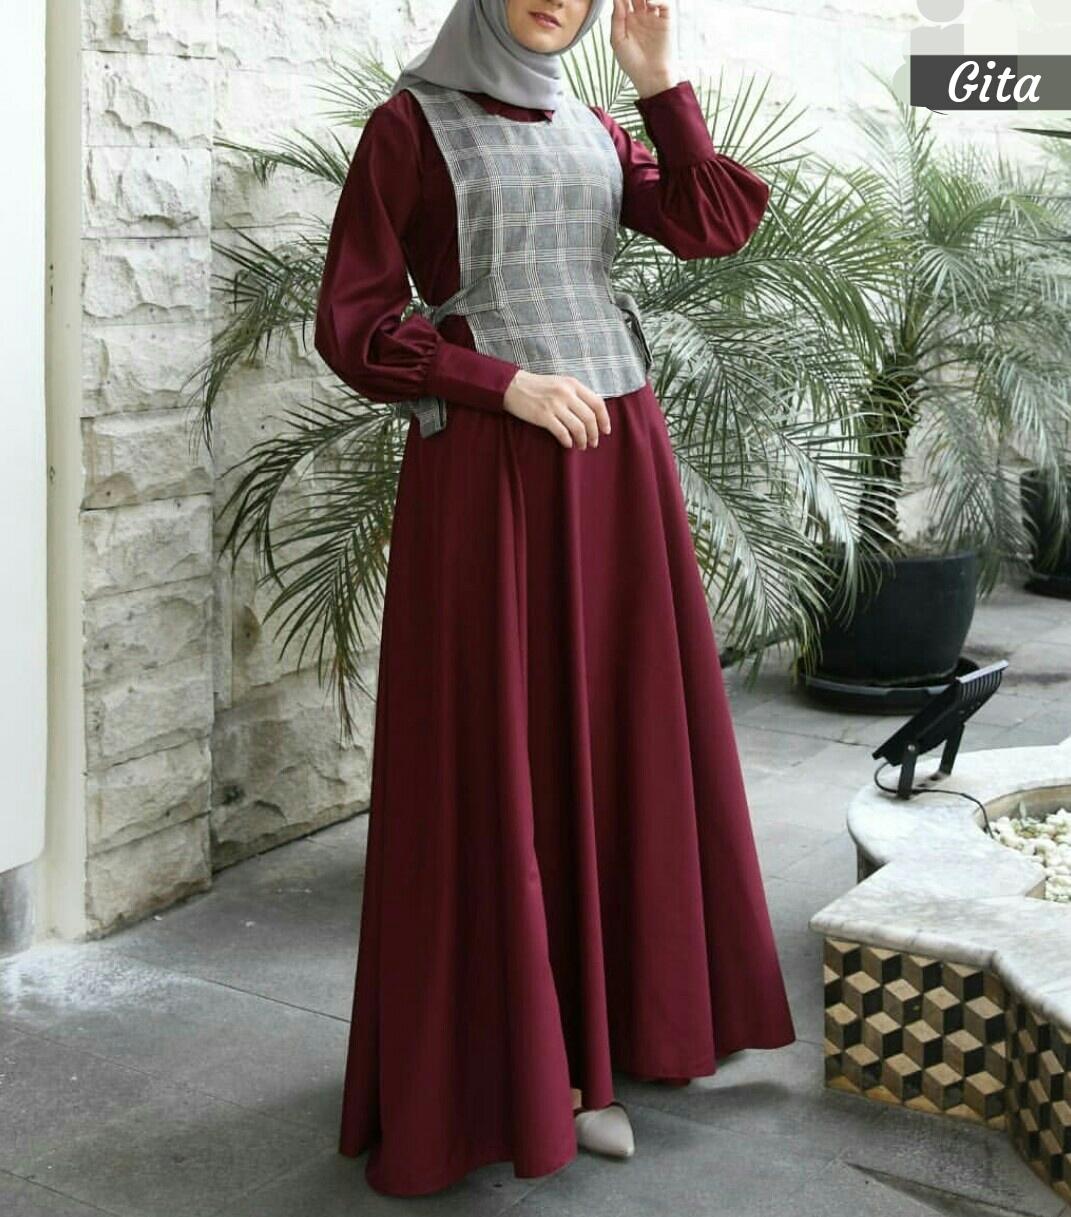 Baju Muslim Modern Gamis GITA MAXY Bahan MOSSCRAPE MIX KATUN KOTAK Baju Gamis Terusan Wanita Paling Laris Dan Trendy Baju Panjang Polos Muslim Dress Pesta Terbaru Maxi Muslimah Termurah Pakaian Modis Simple Casual Terbaru 2019